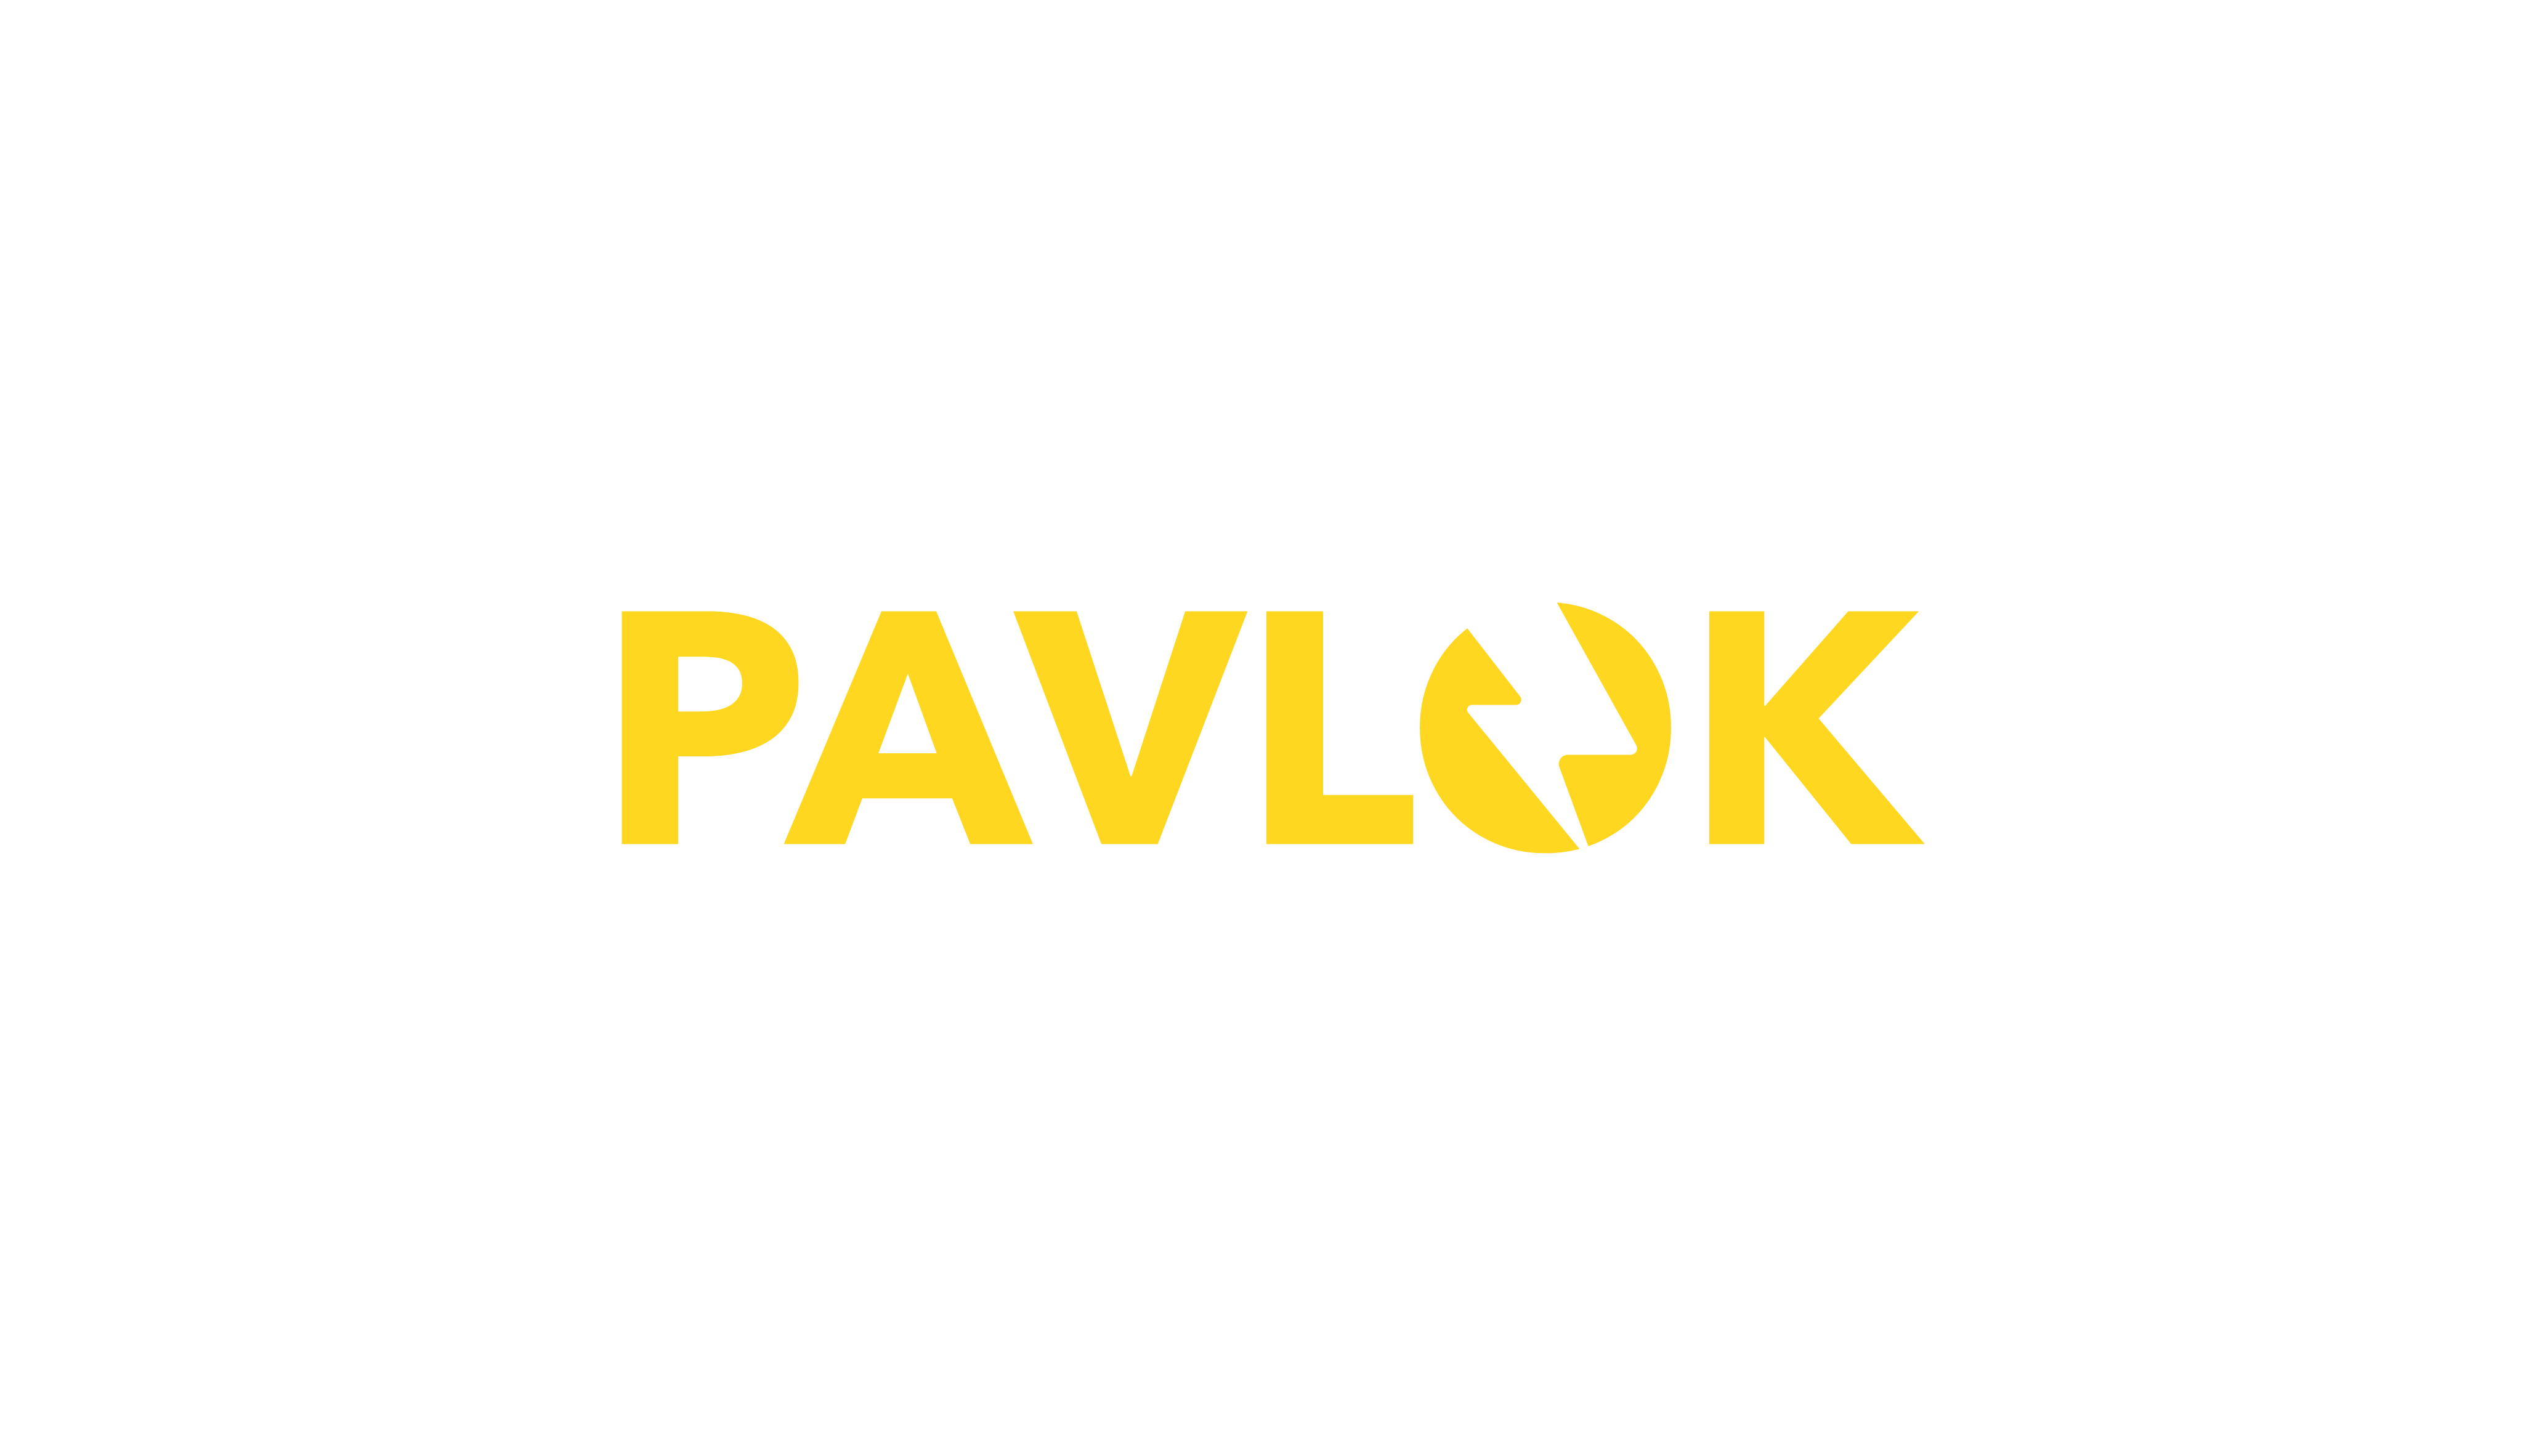 The Pavlok Challenge - Volts Edition